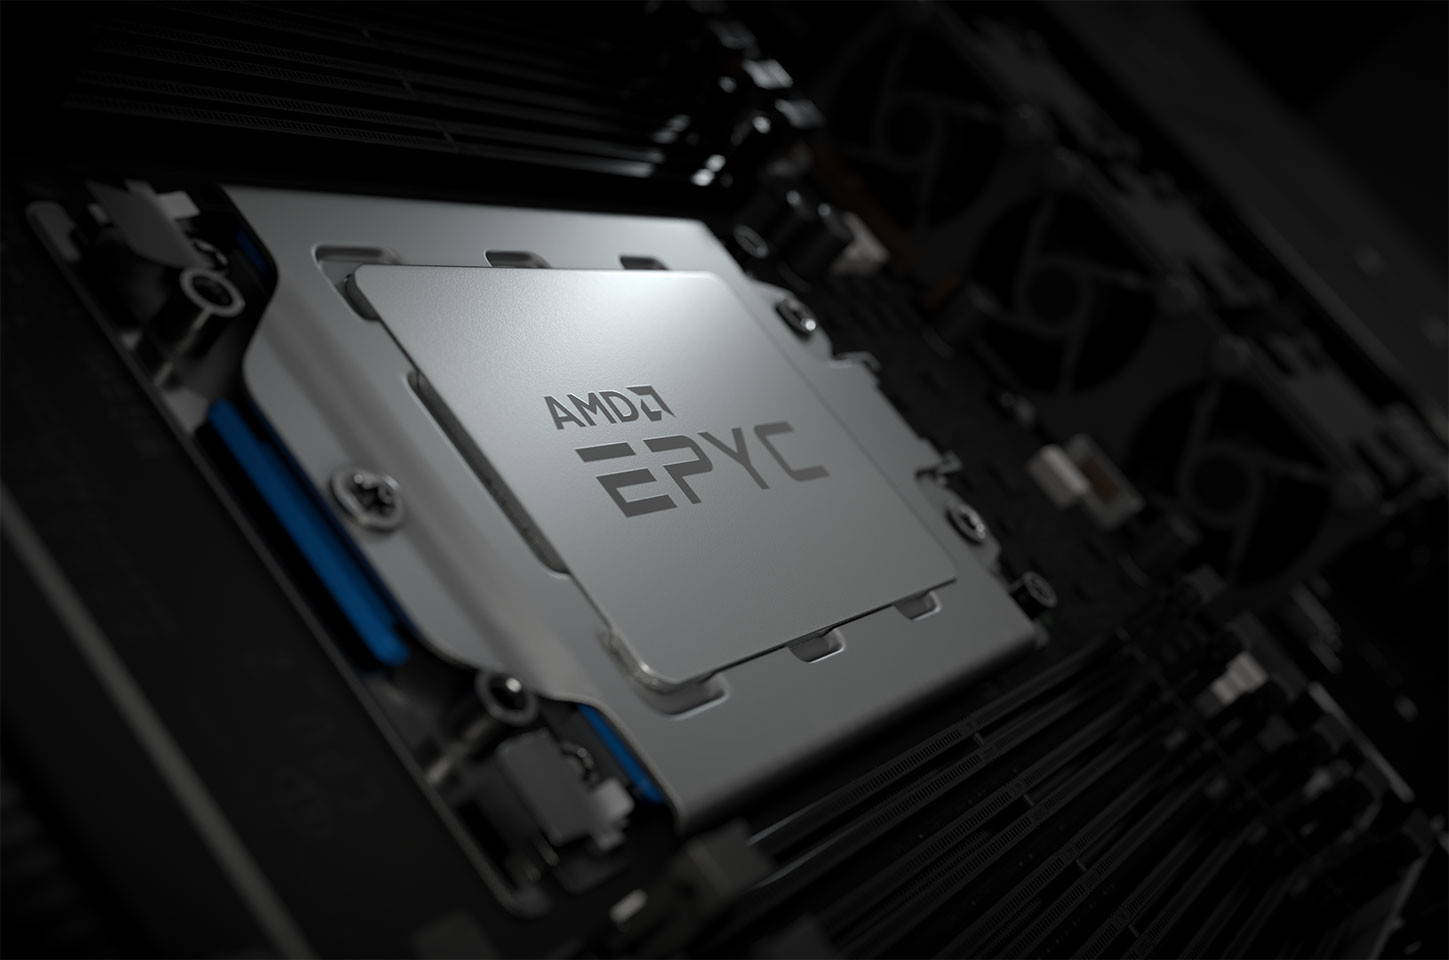 2 раза AMD EPYC 7742, кажется, разрушает Intel Xeon Platinum 8180M 4x в Geekbench ...